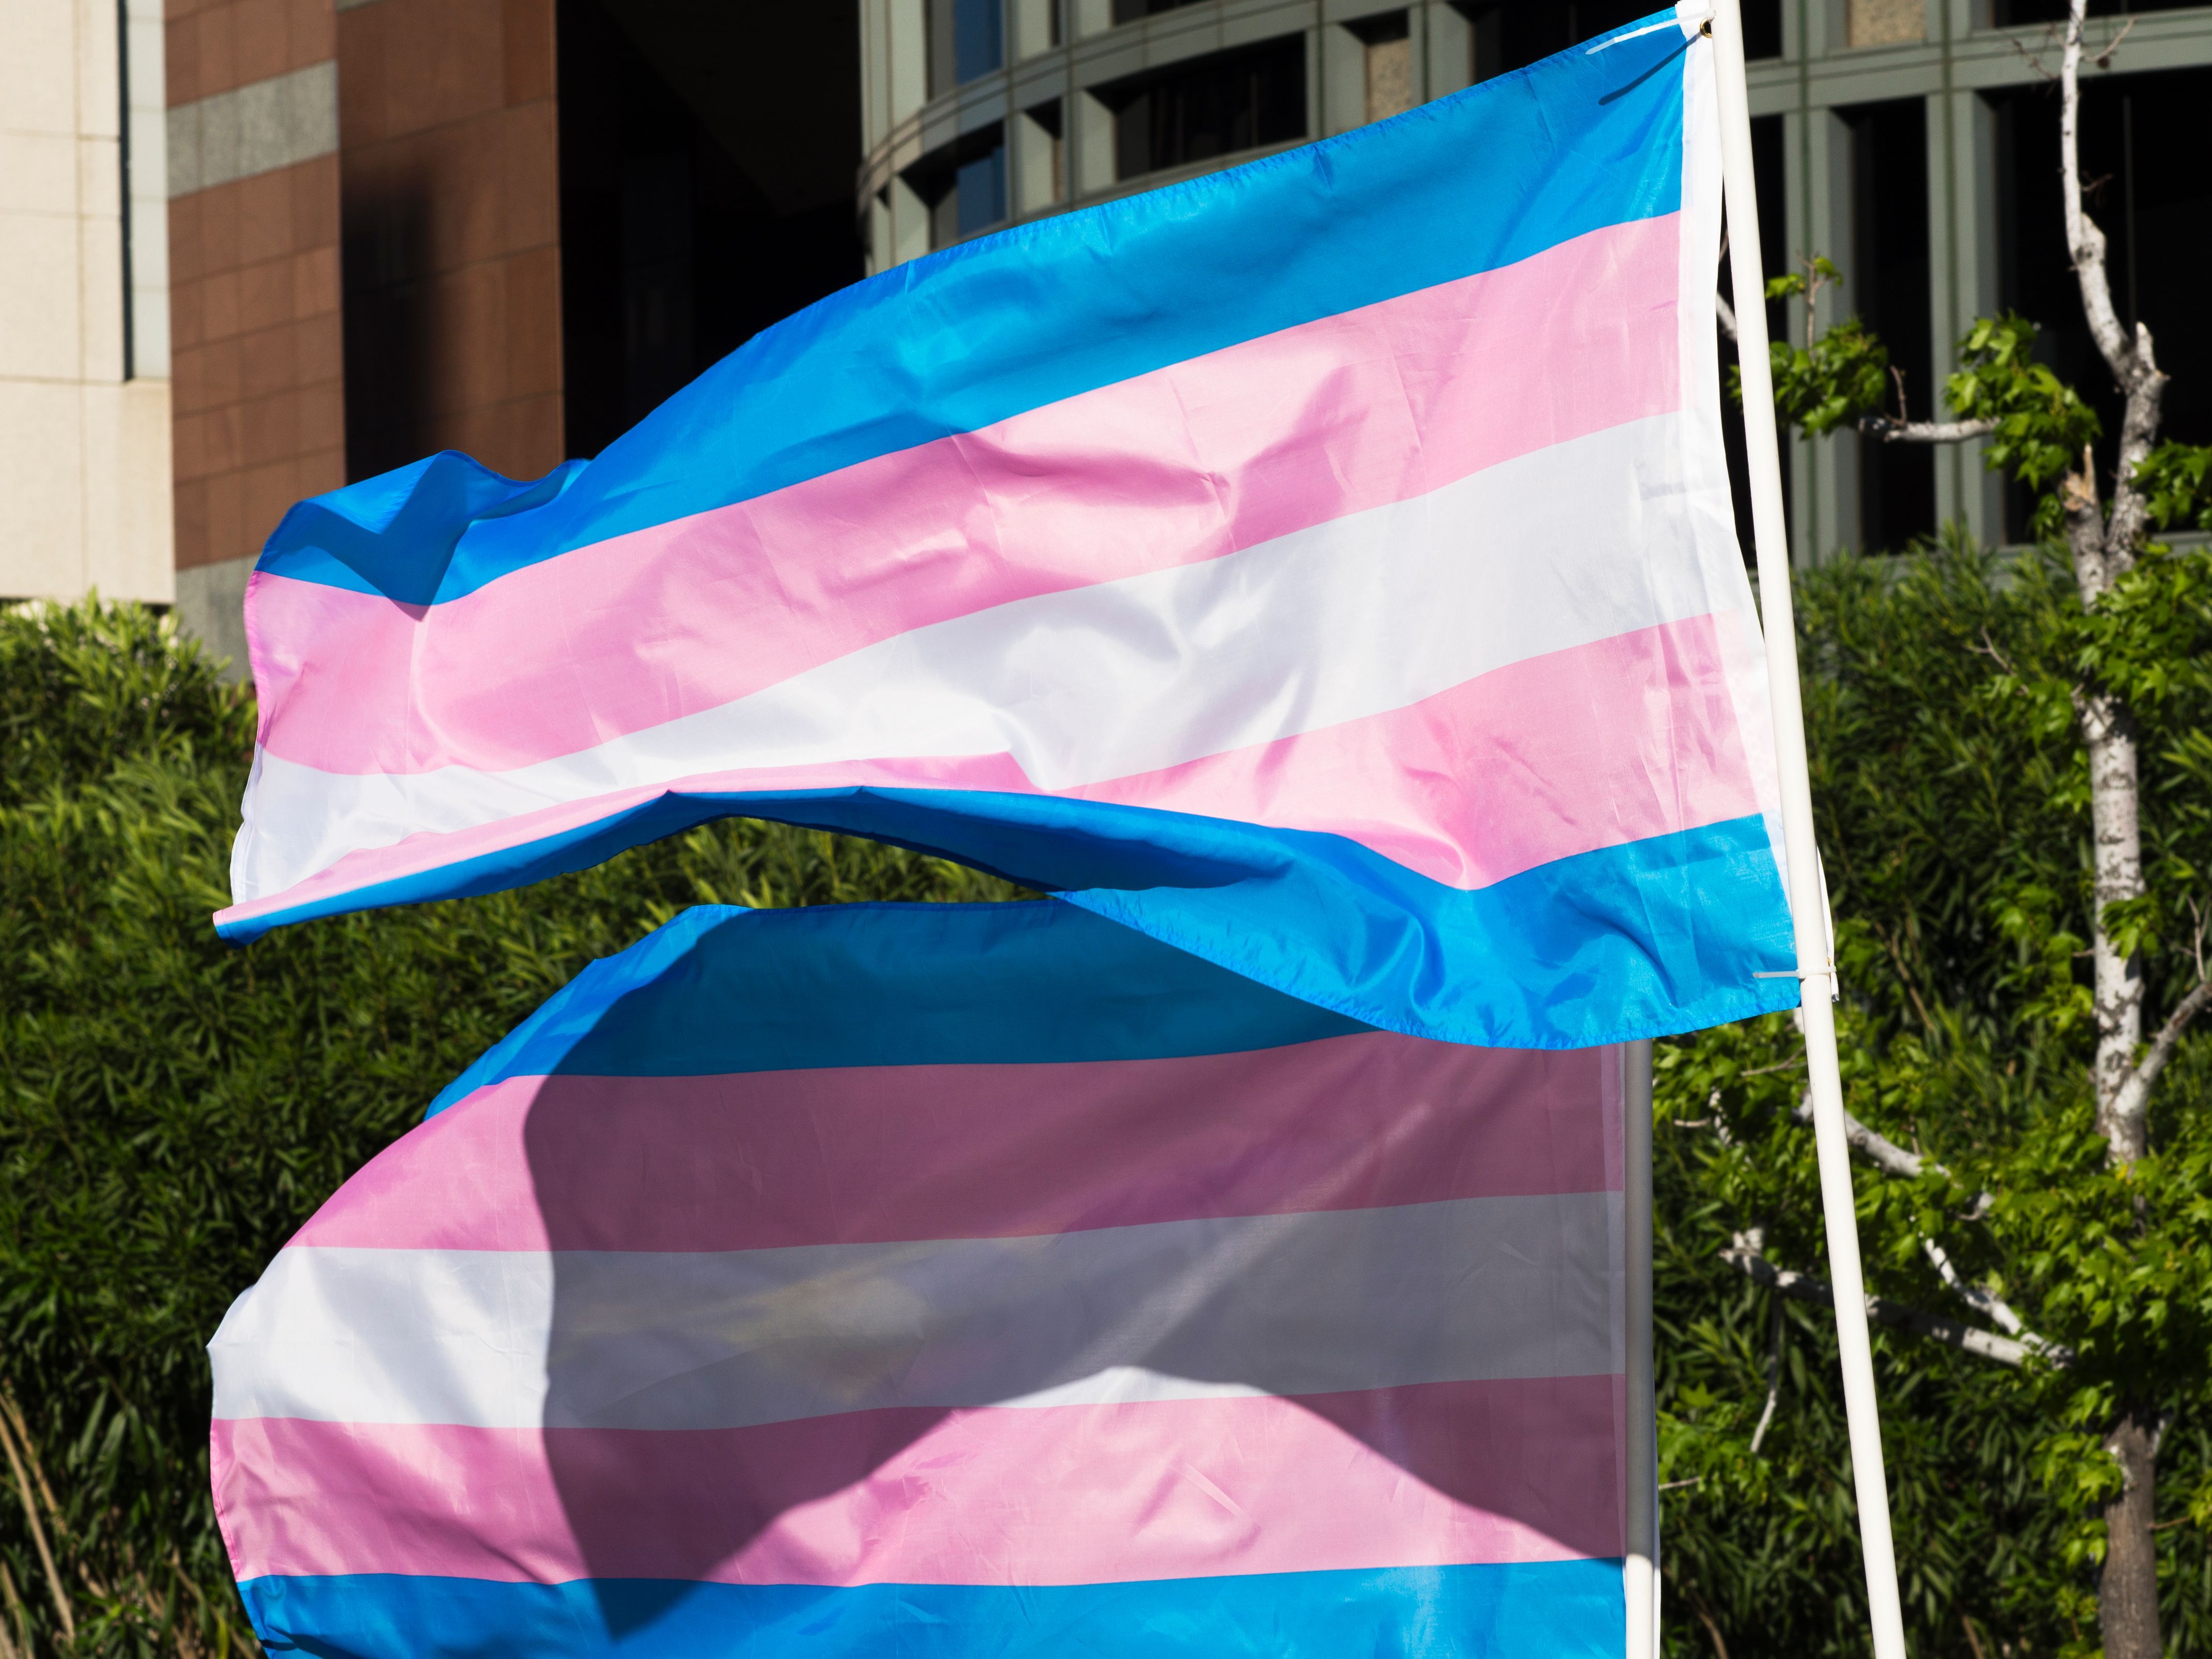 OUTspoken: Transgender Day of Visibility celebrates individuals